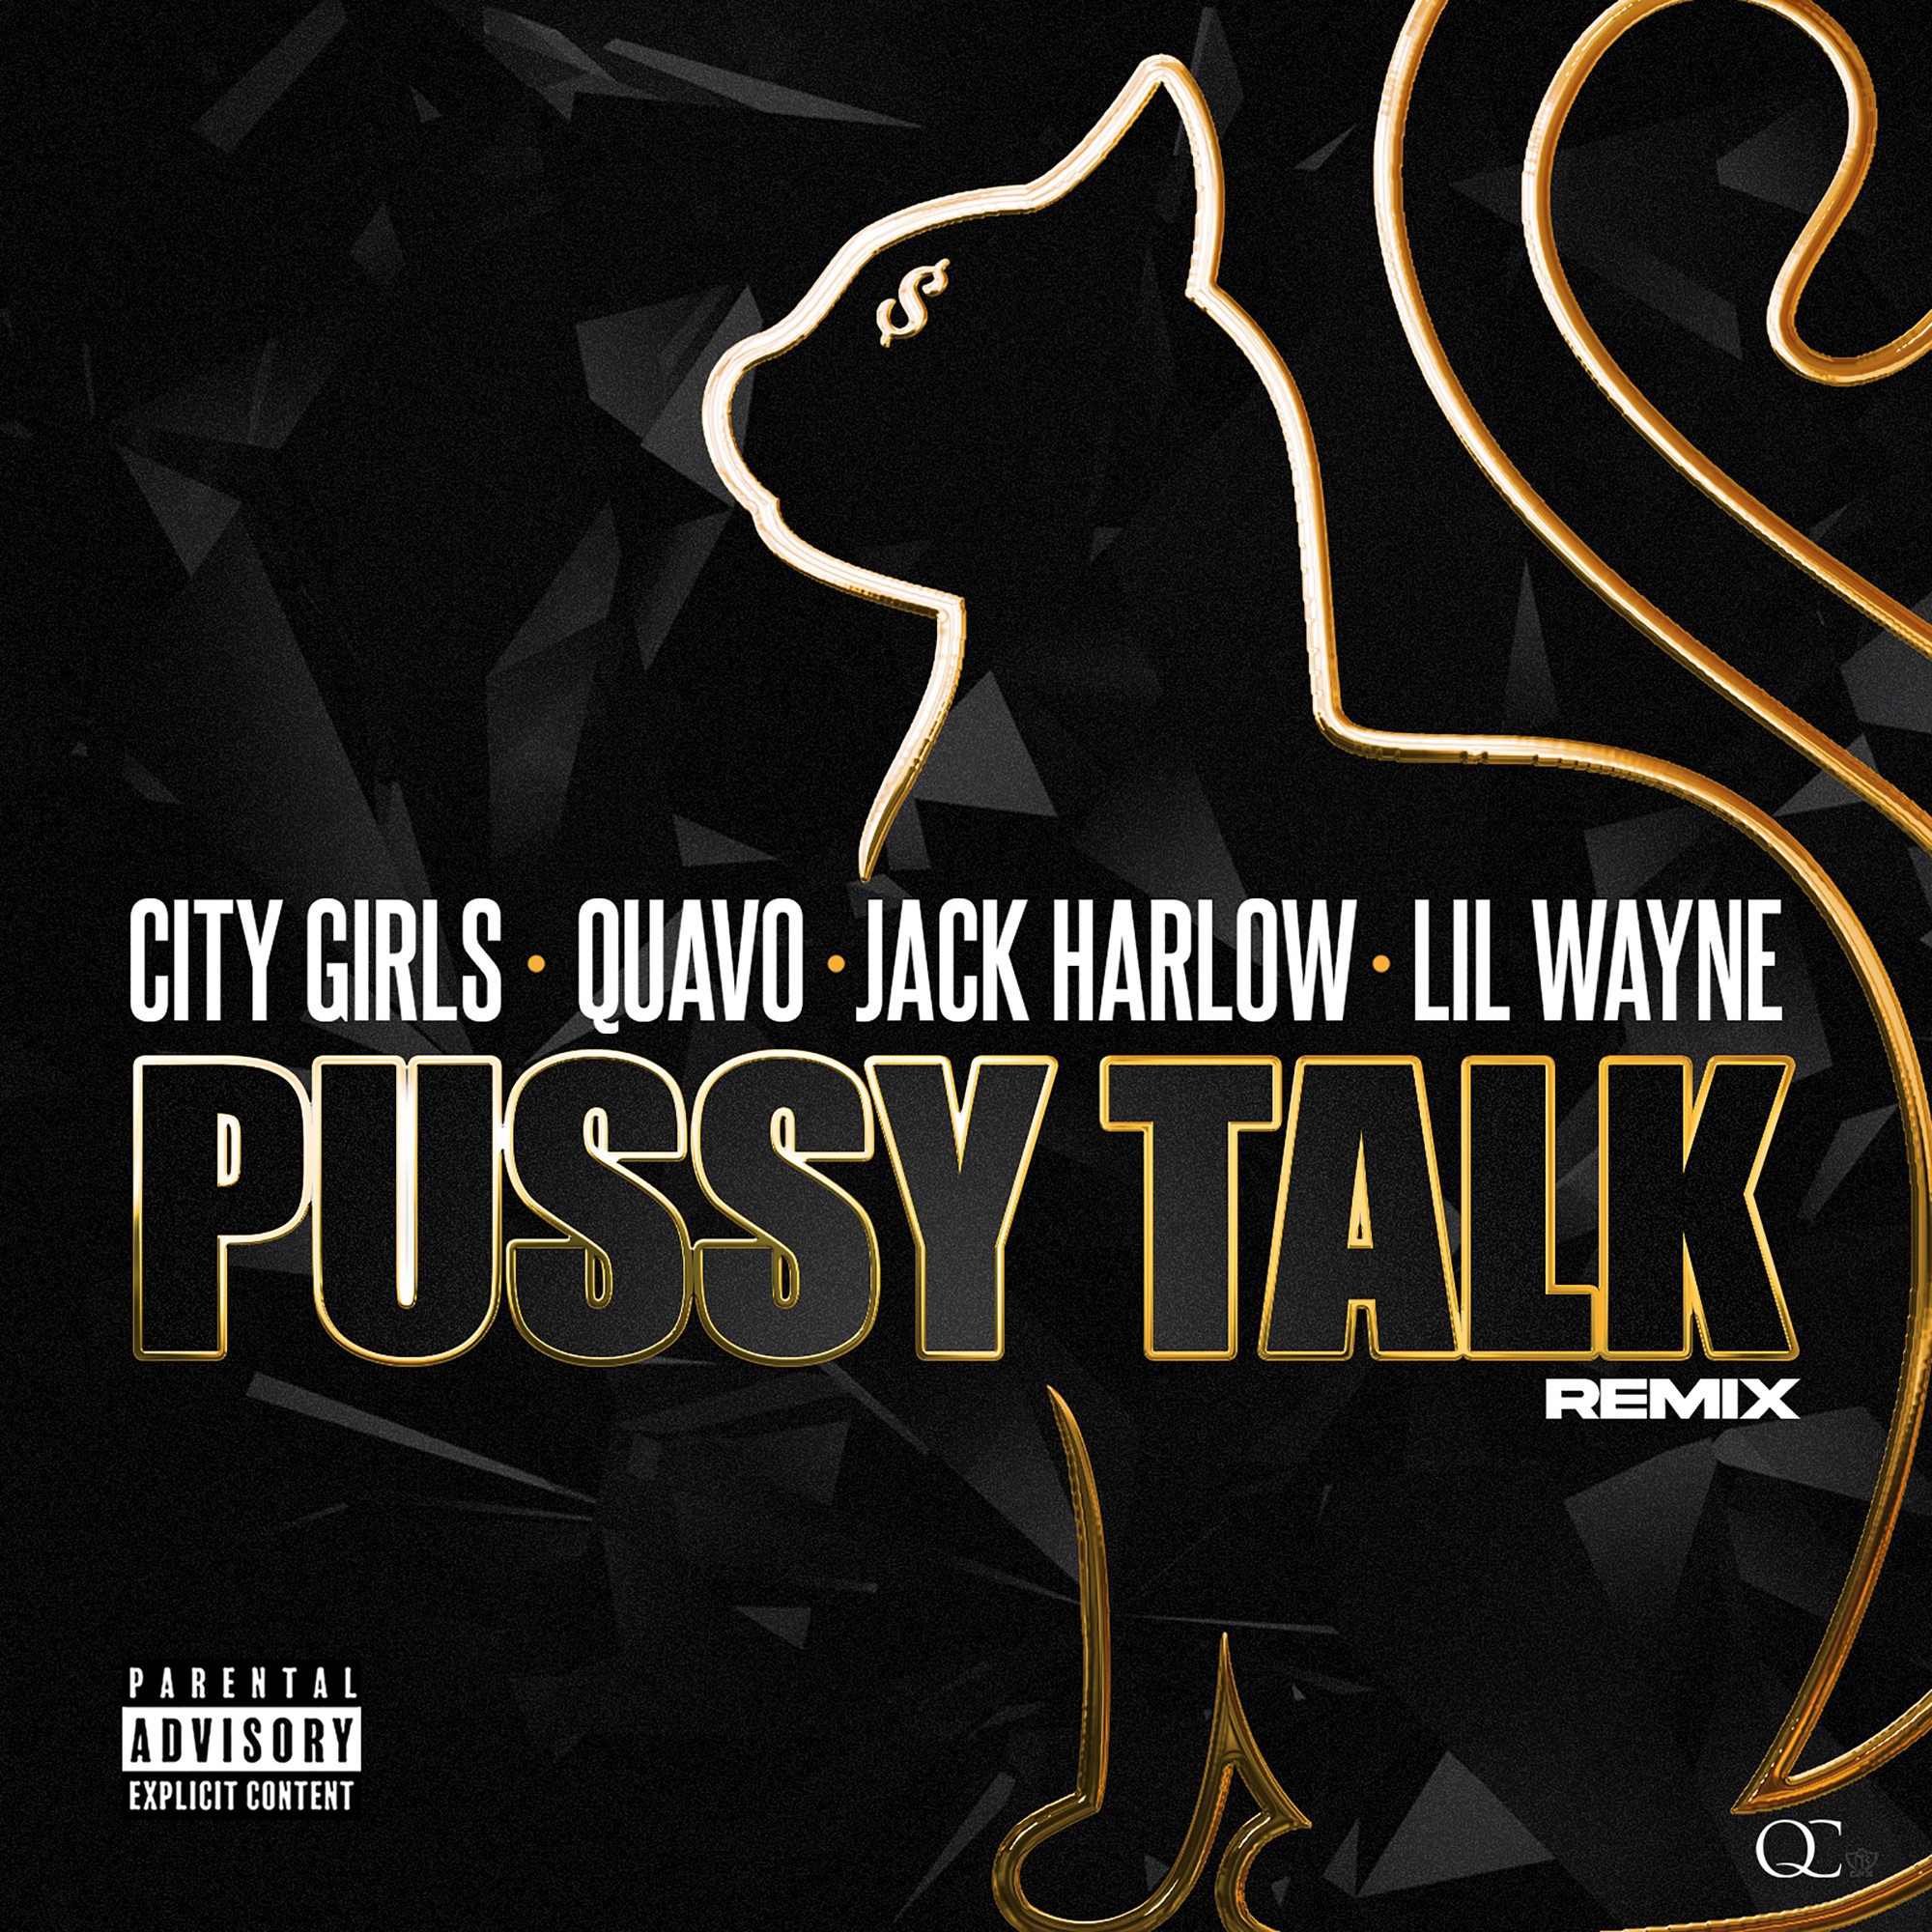 City Girls, Quavo & Lil Wayne - Pussy Talk (Remix) [feat. Jack Harlow] - Single